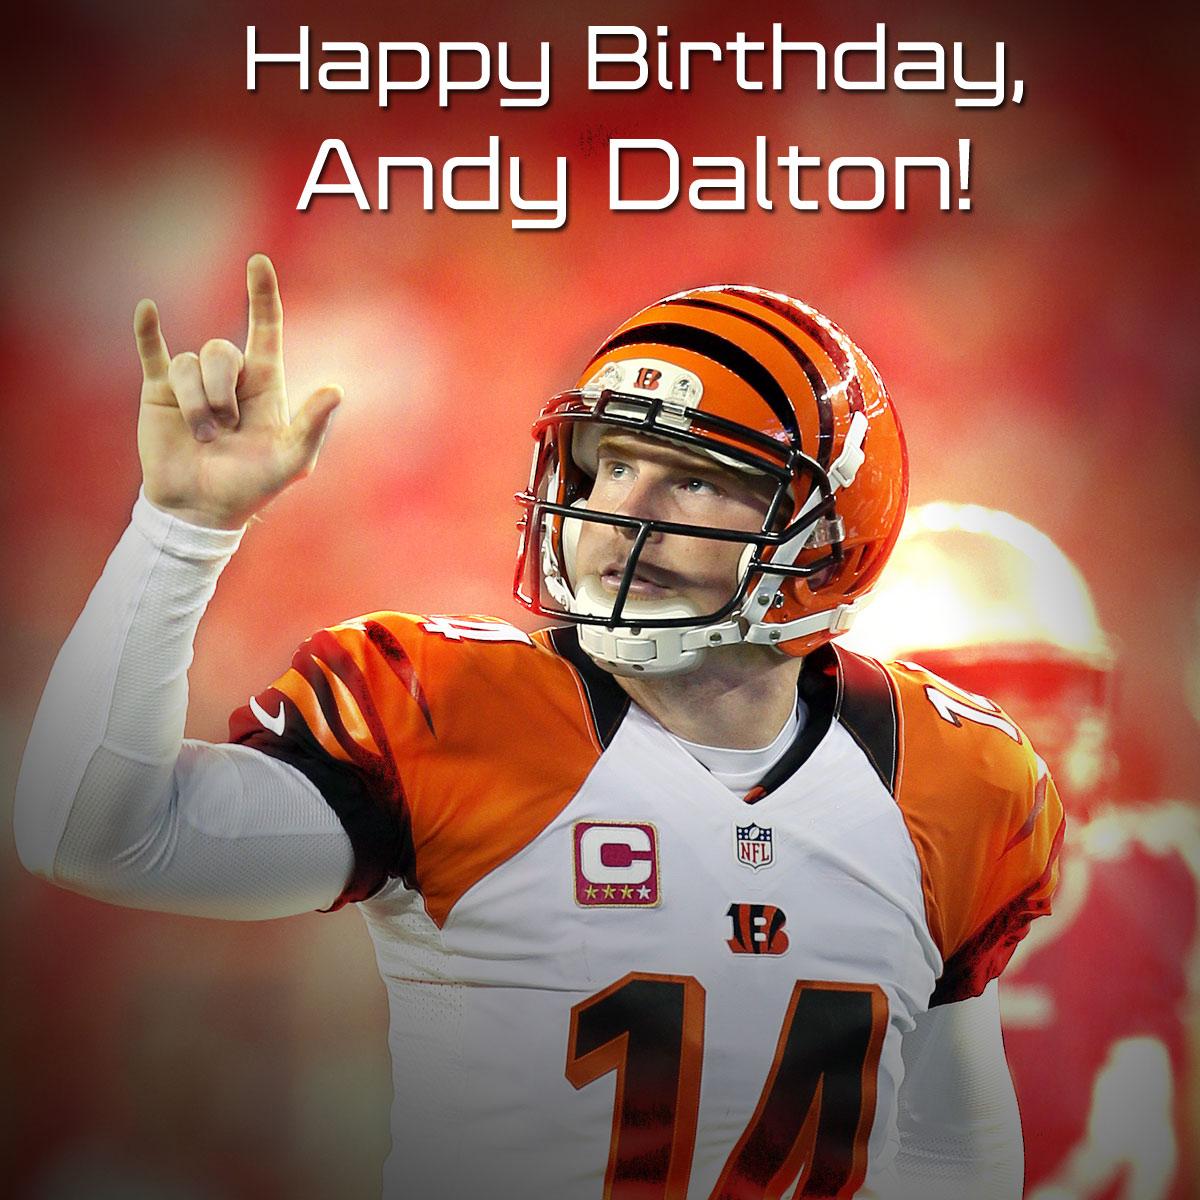 To wish Andy Dalton a Happy Birthday! 